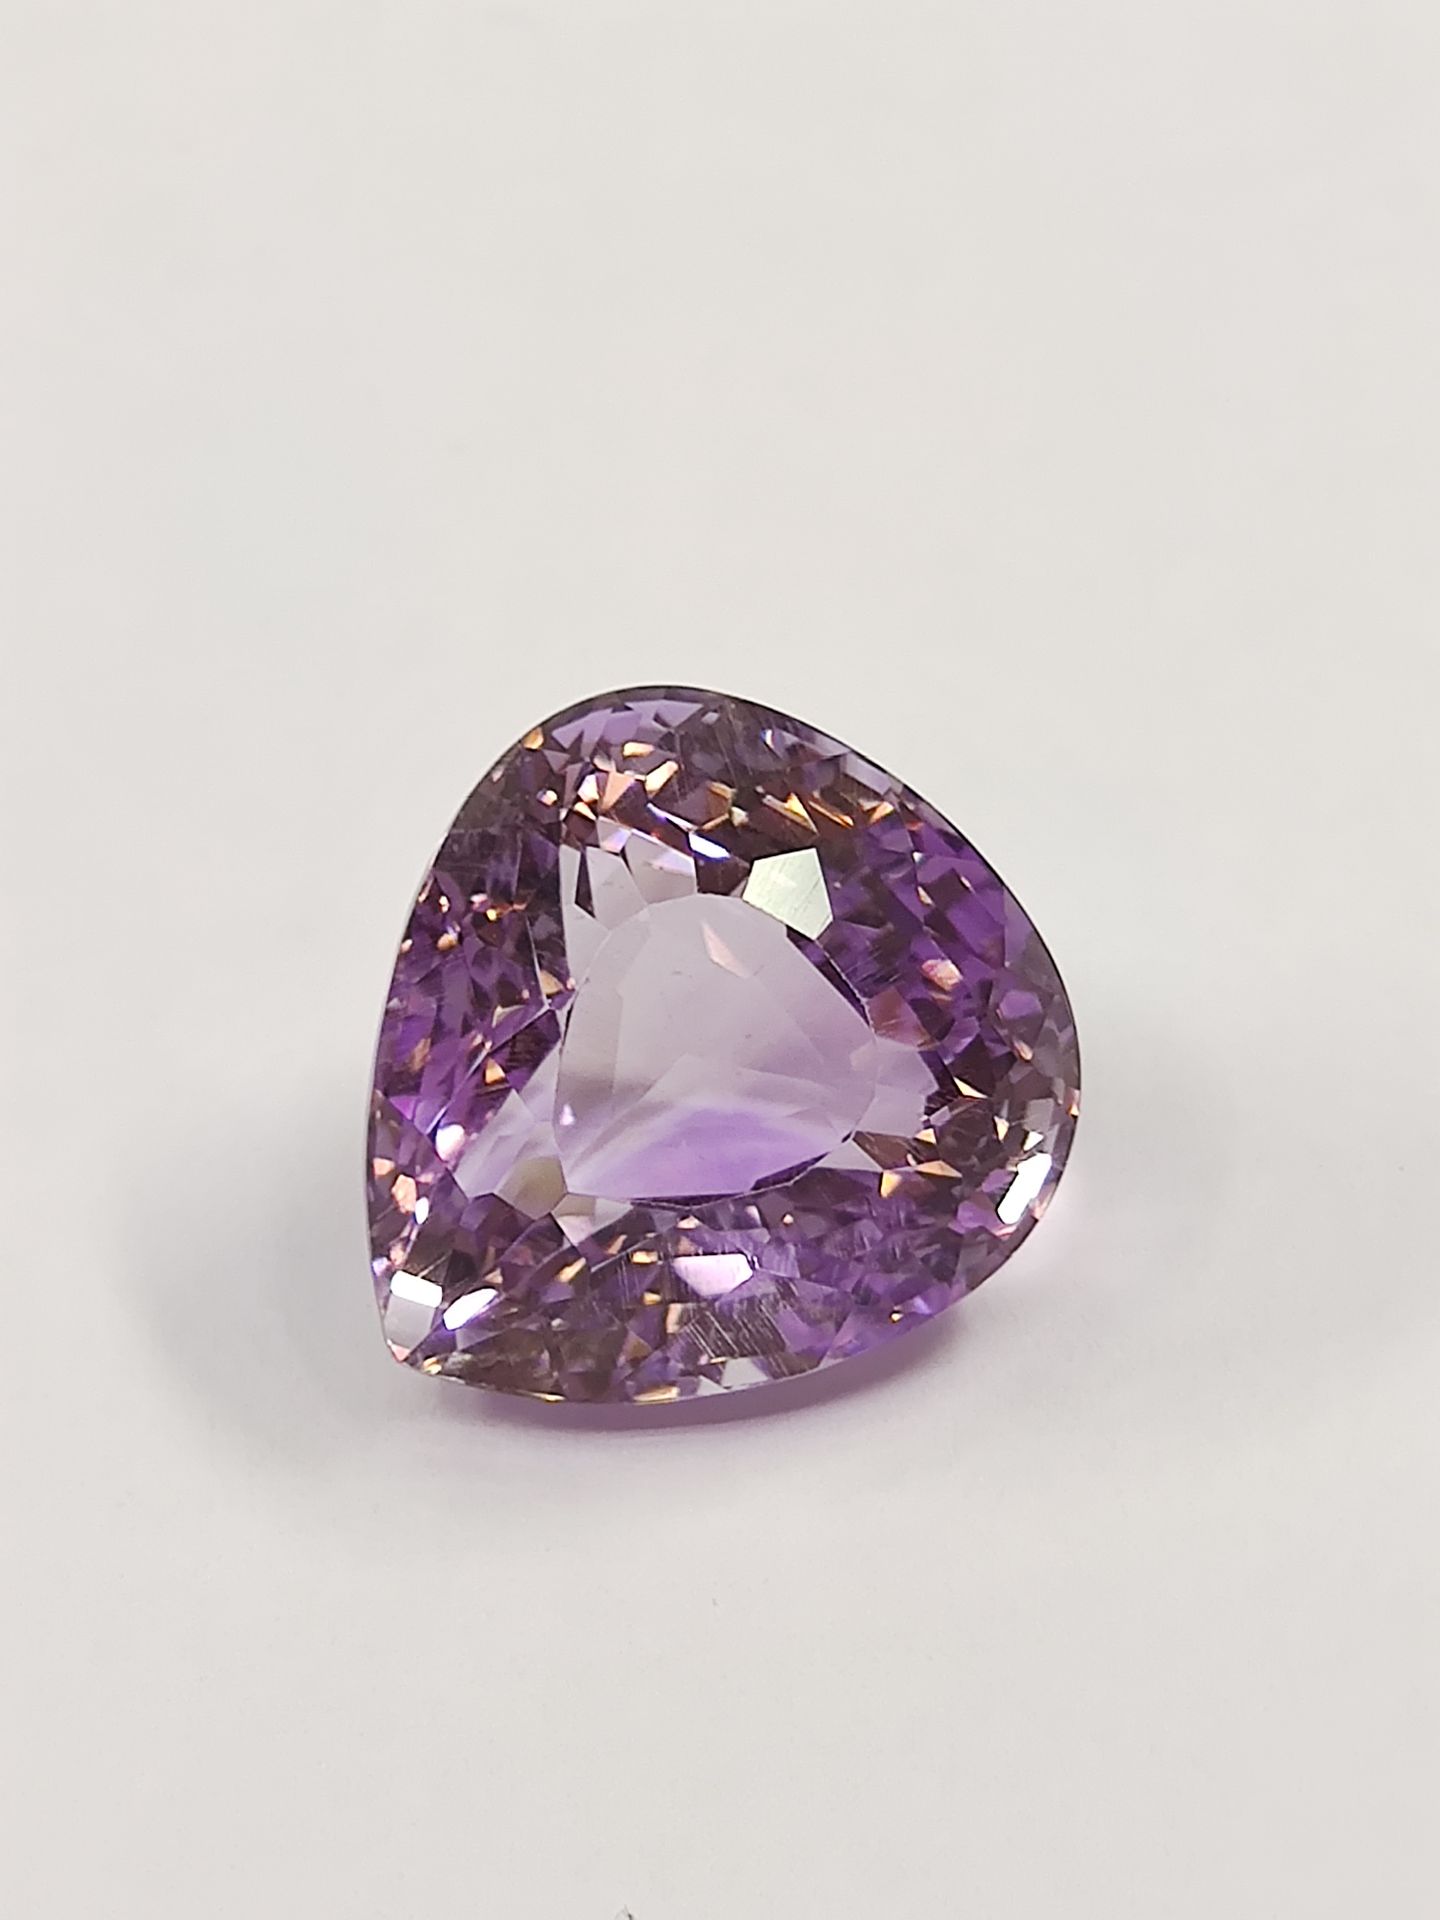 Null Violet AMETHYST VVS oval, Uruguay, 28,10 carats


Size : 20 x 18,5